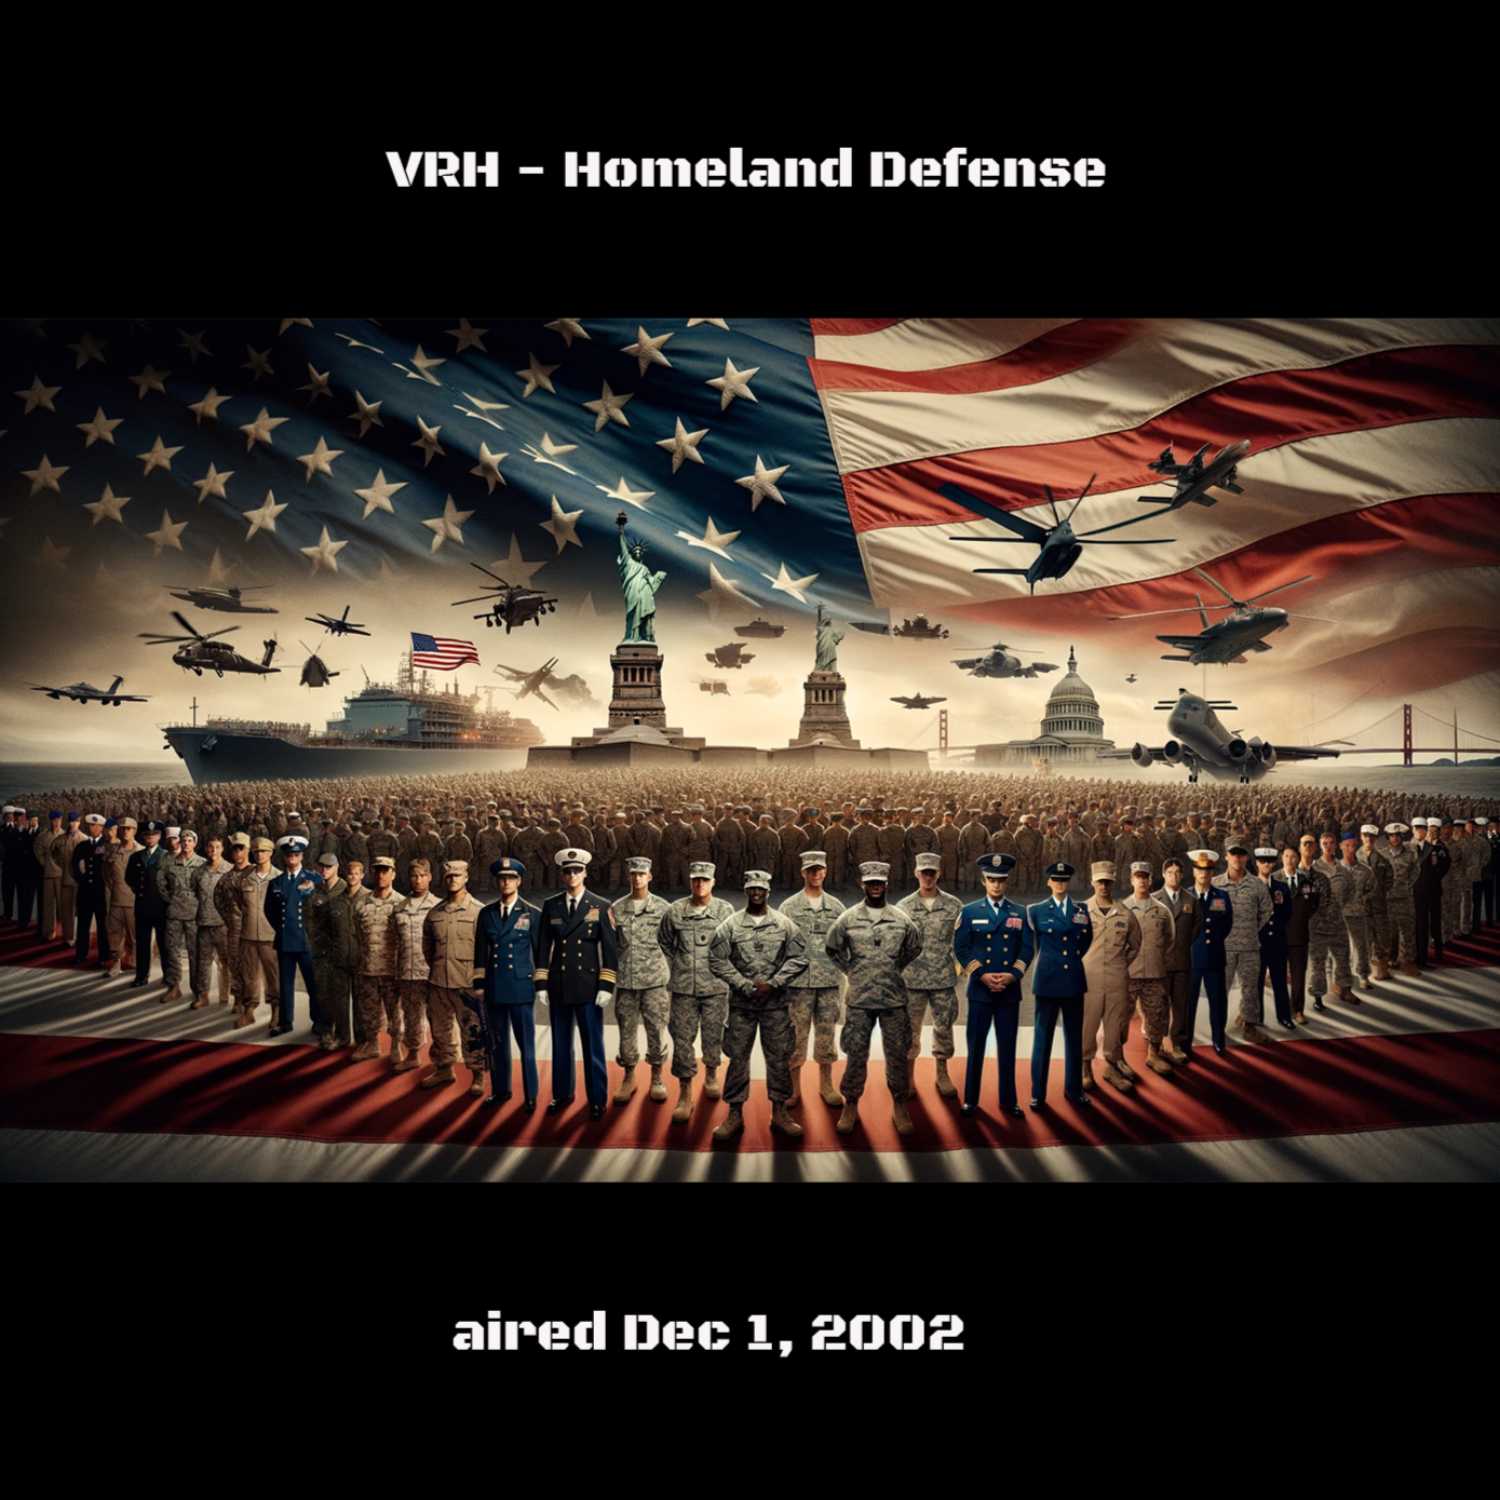 VRH - Homeland Defense - aired Dec 1, 2002